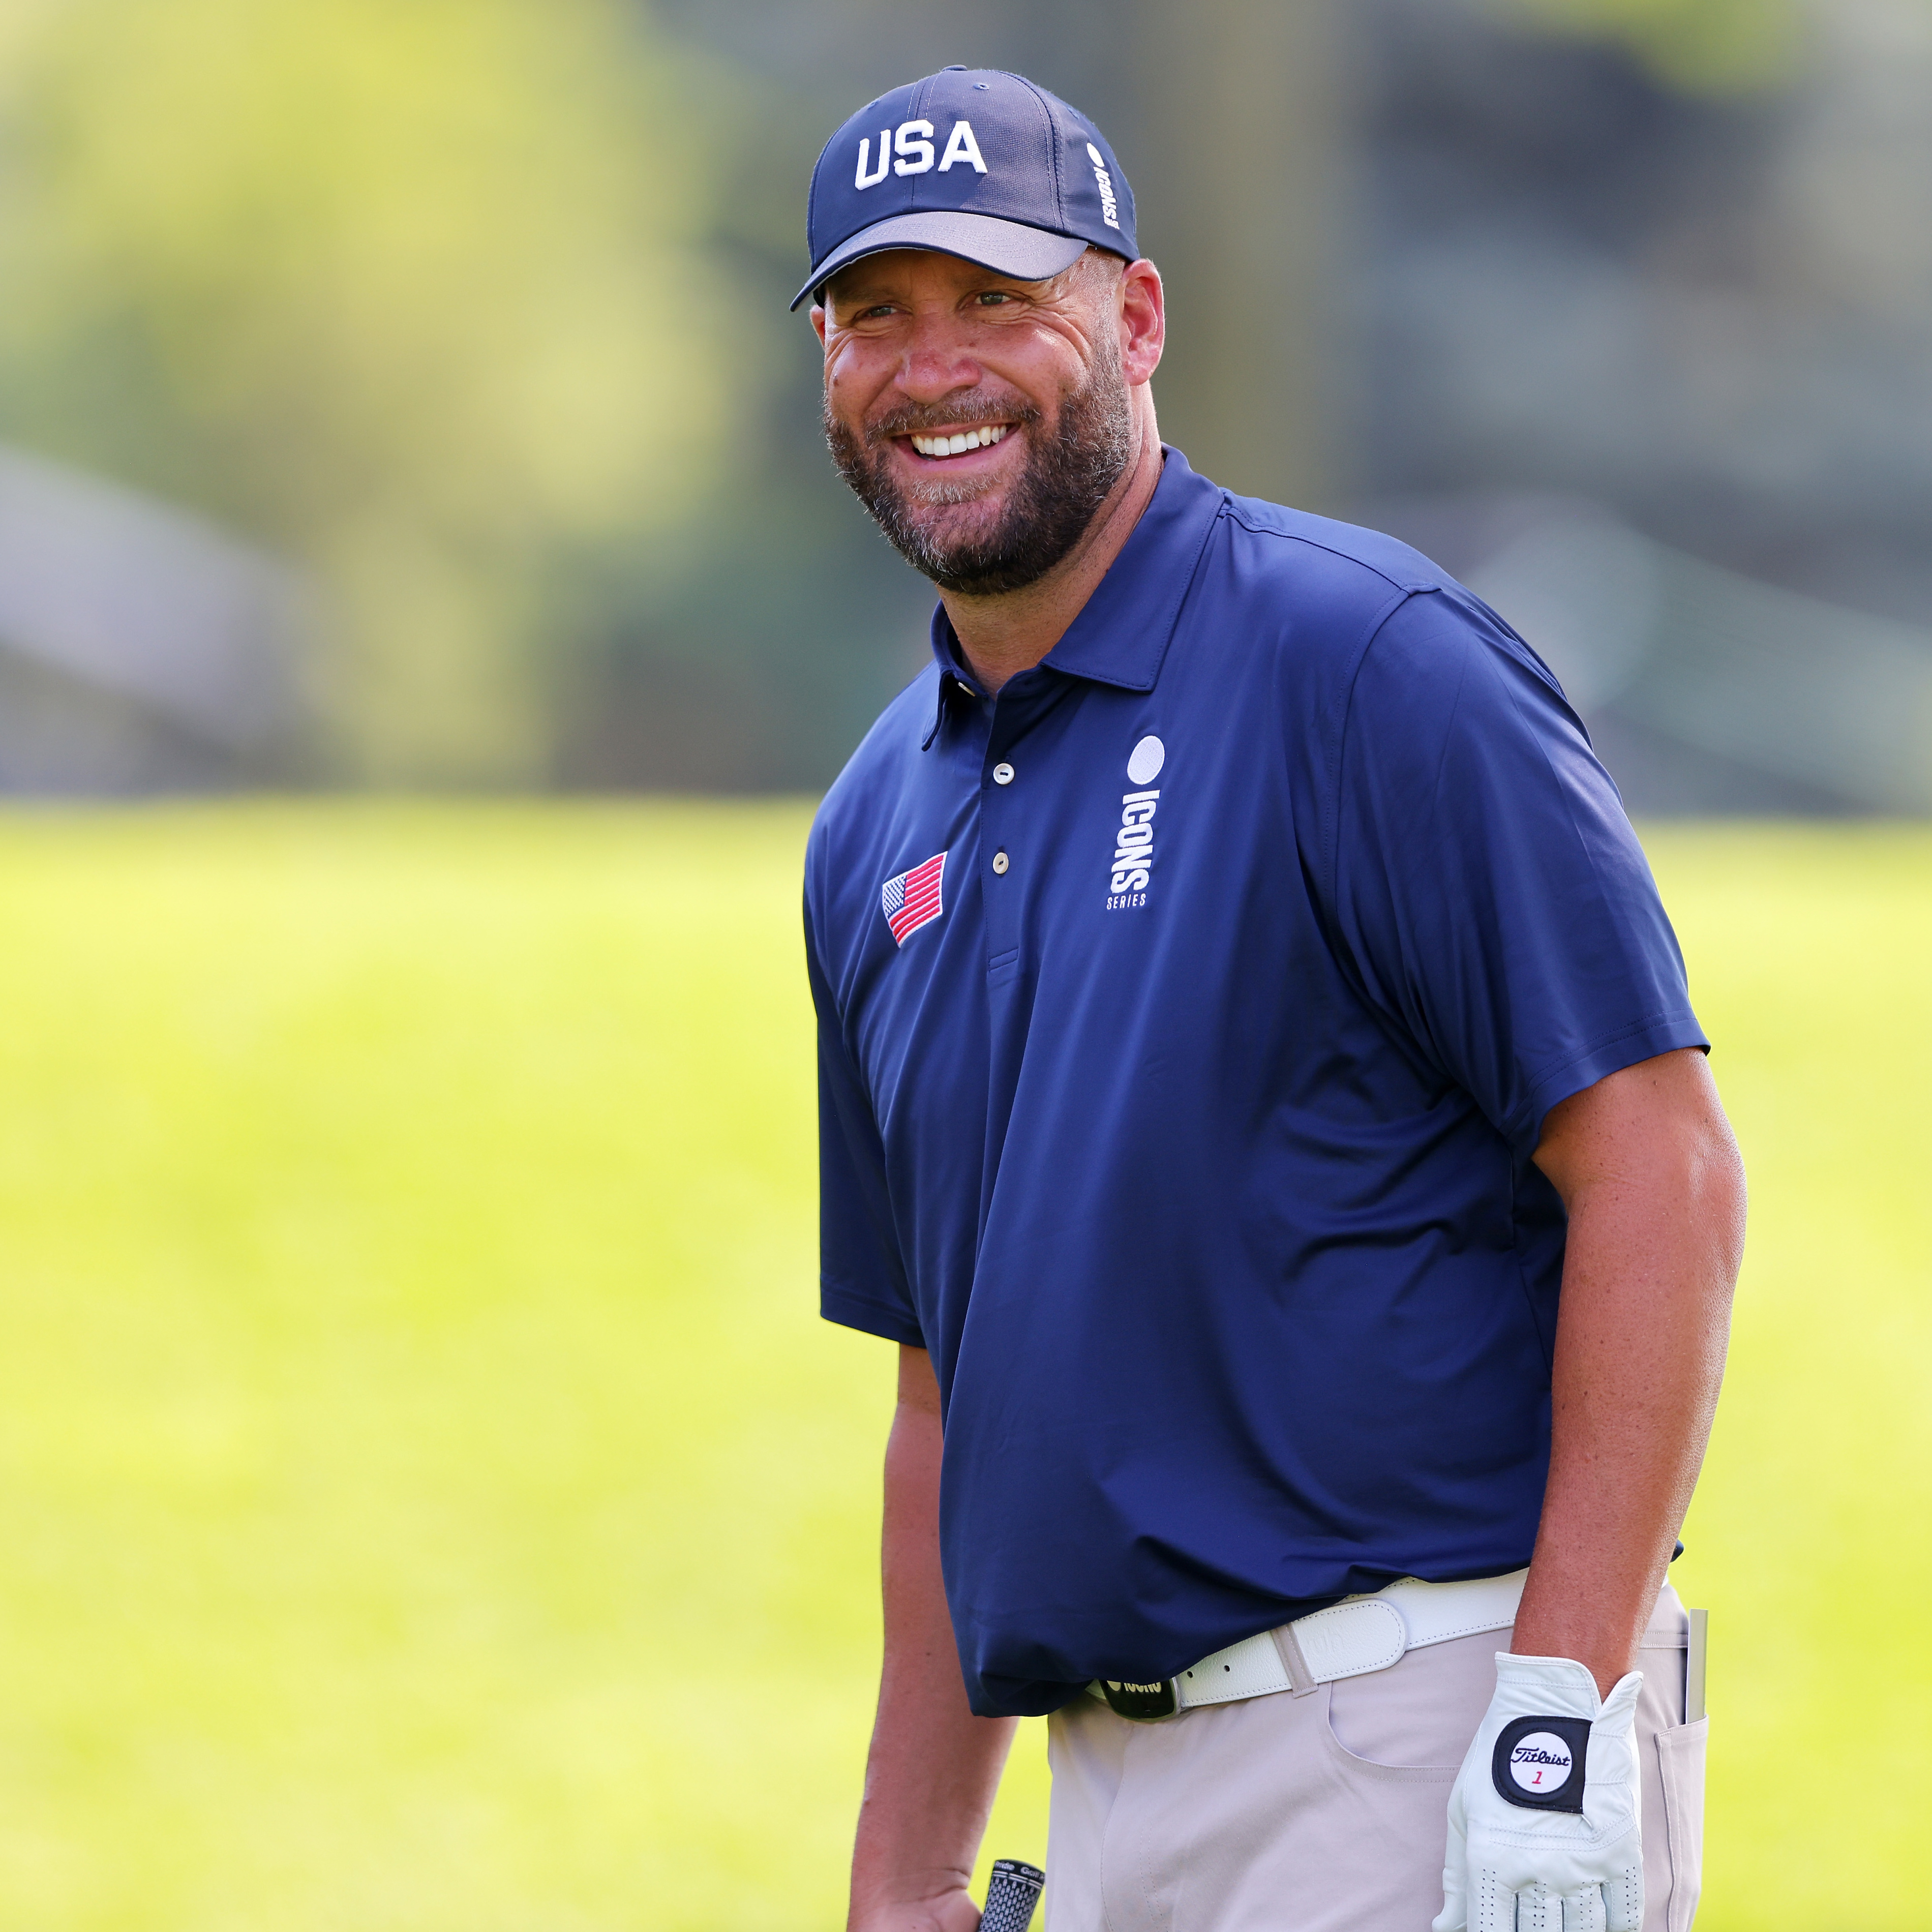 Team USA Wins Icons Series Golf Behind Ben Roethlisberger, Michael Phelps